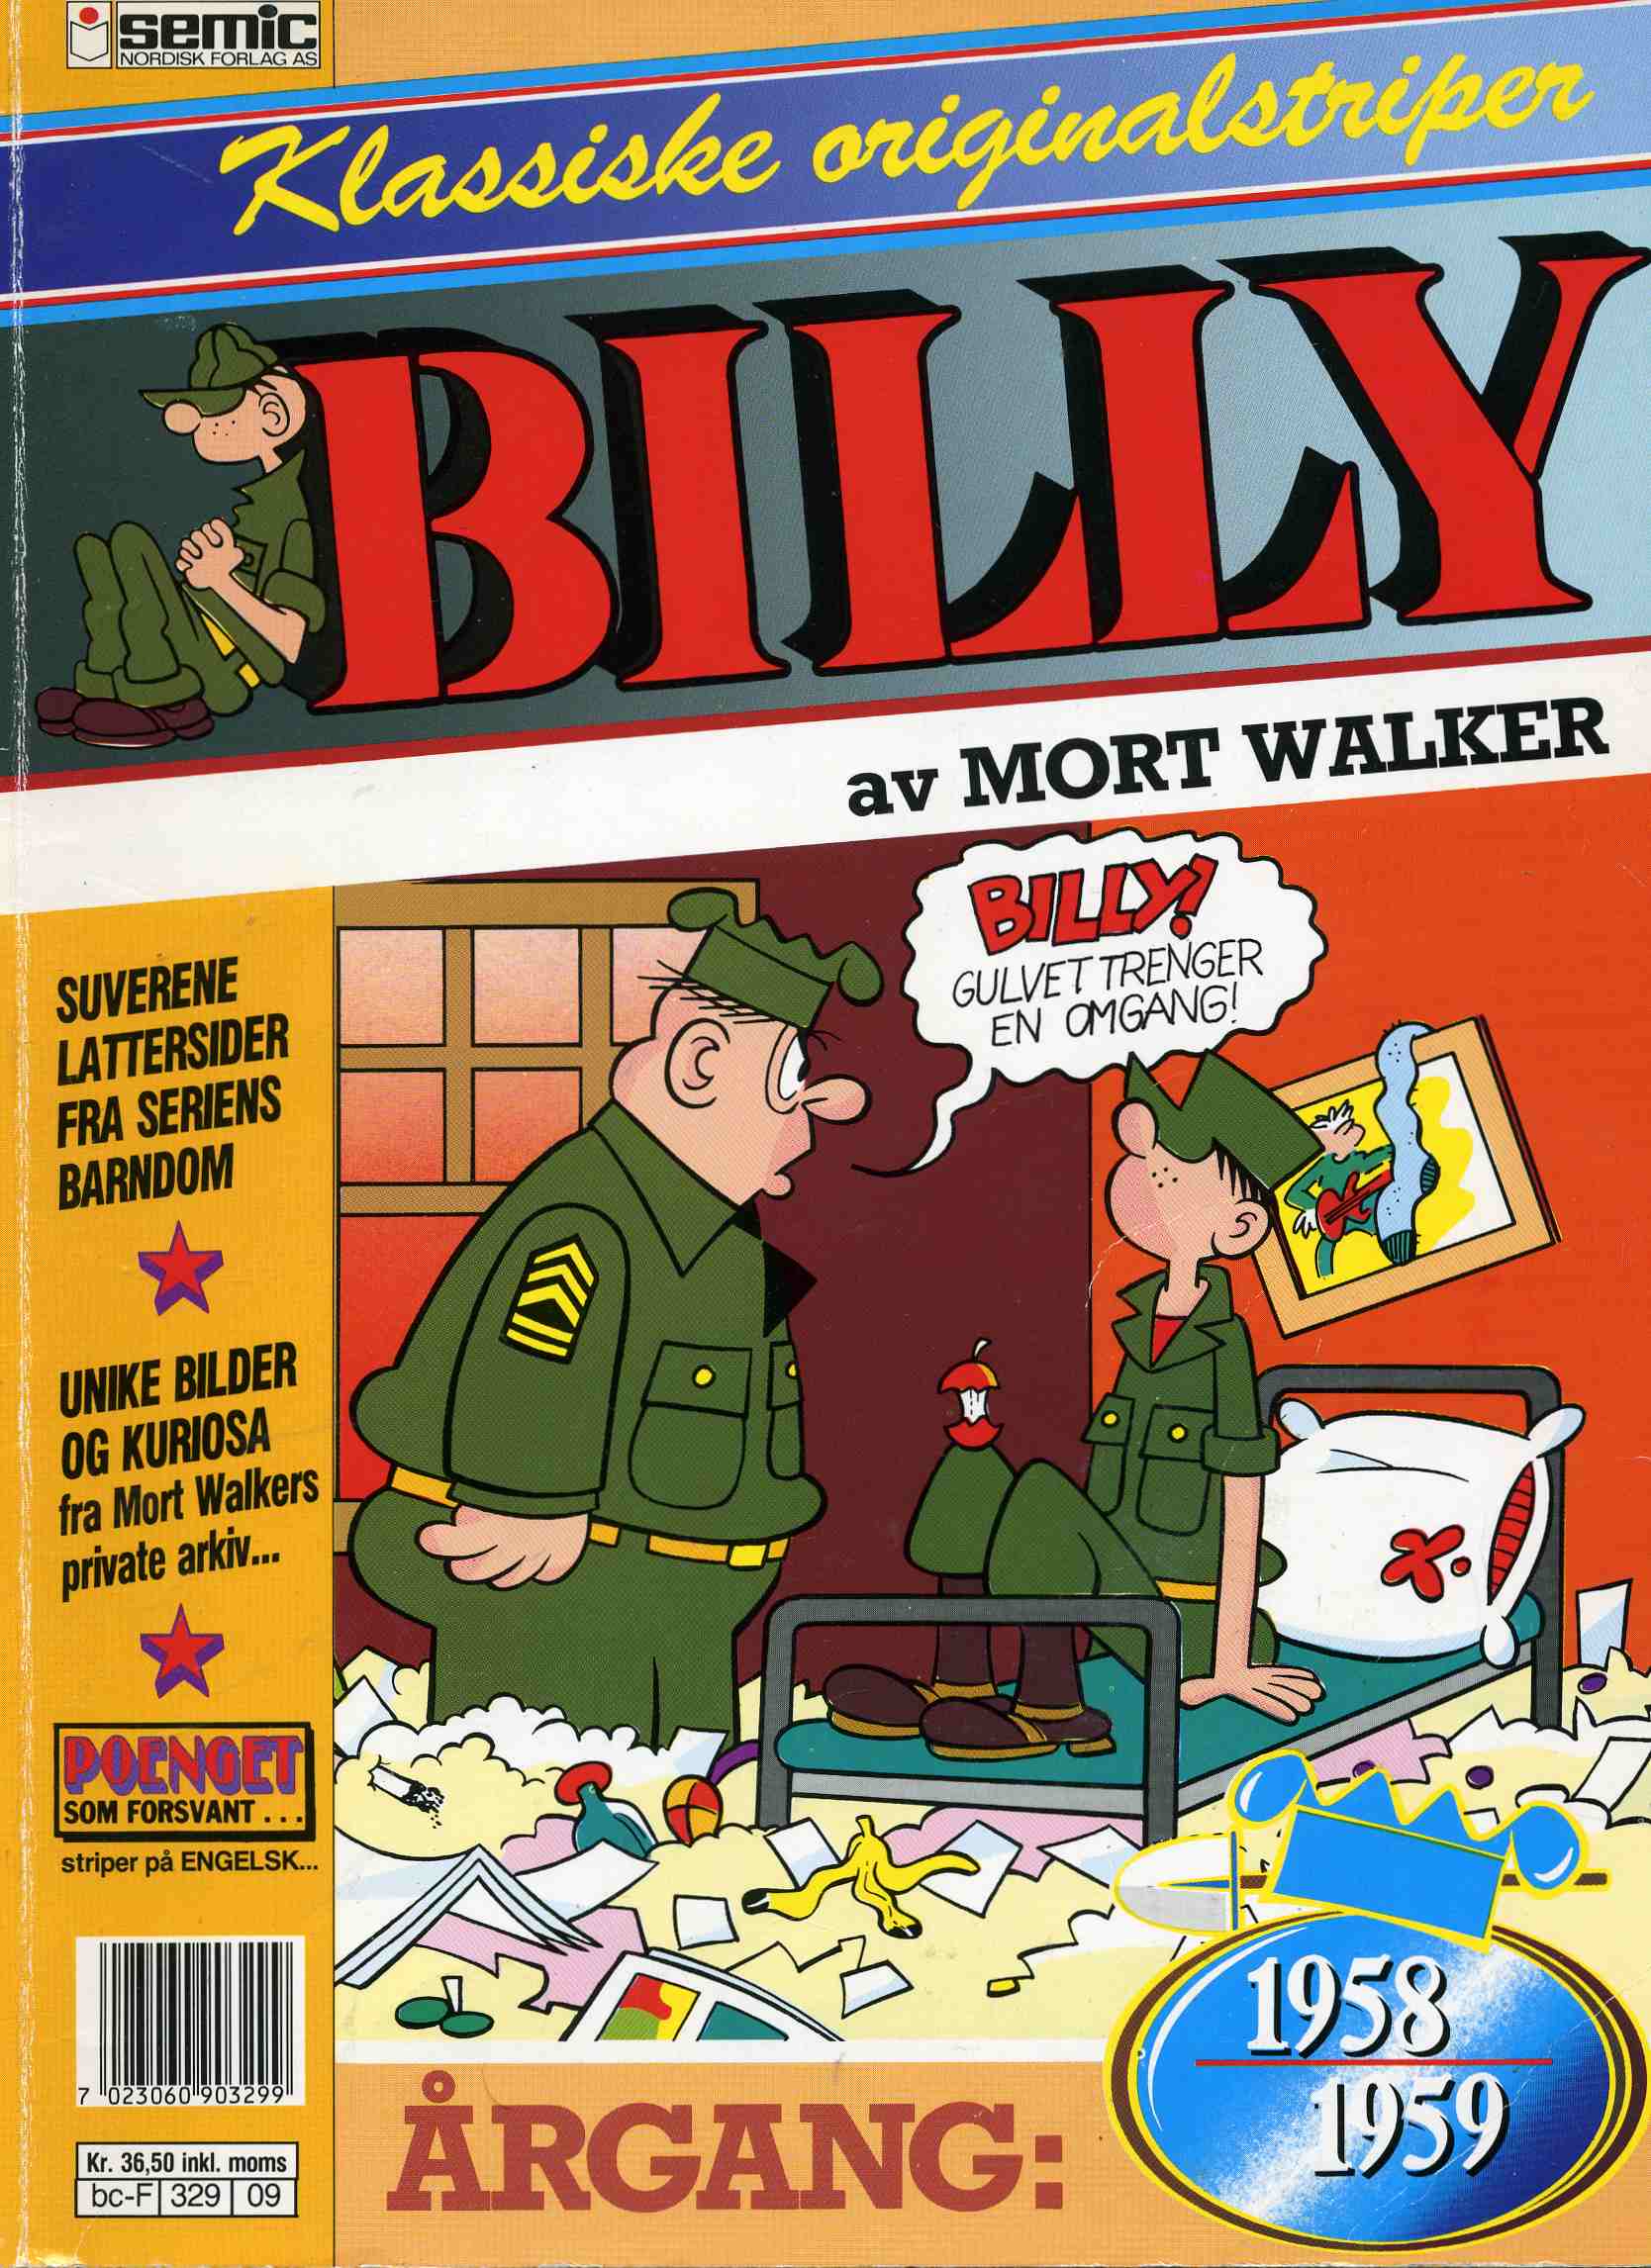 Billy 1958/59 trykket 1990